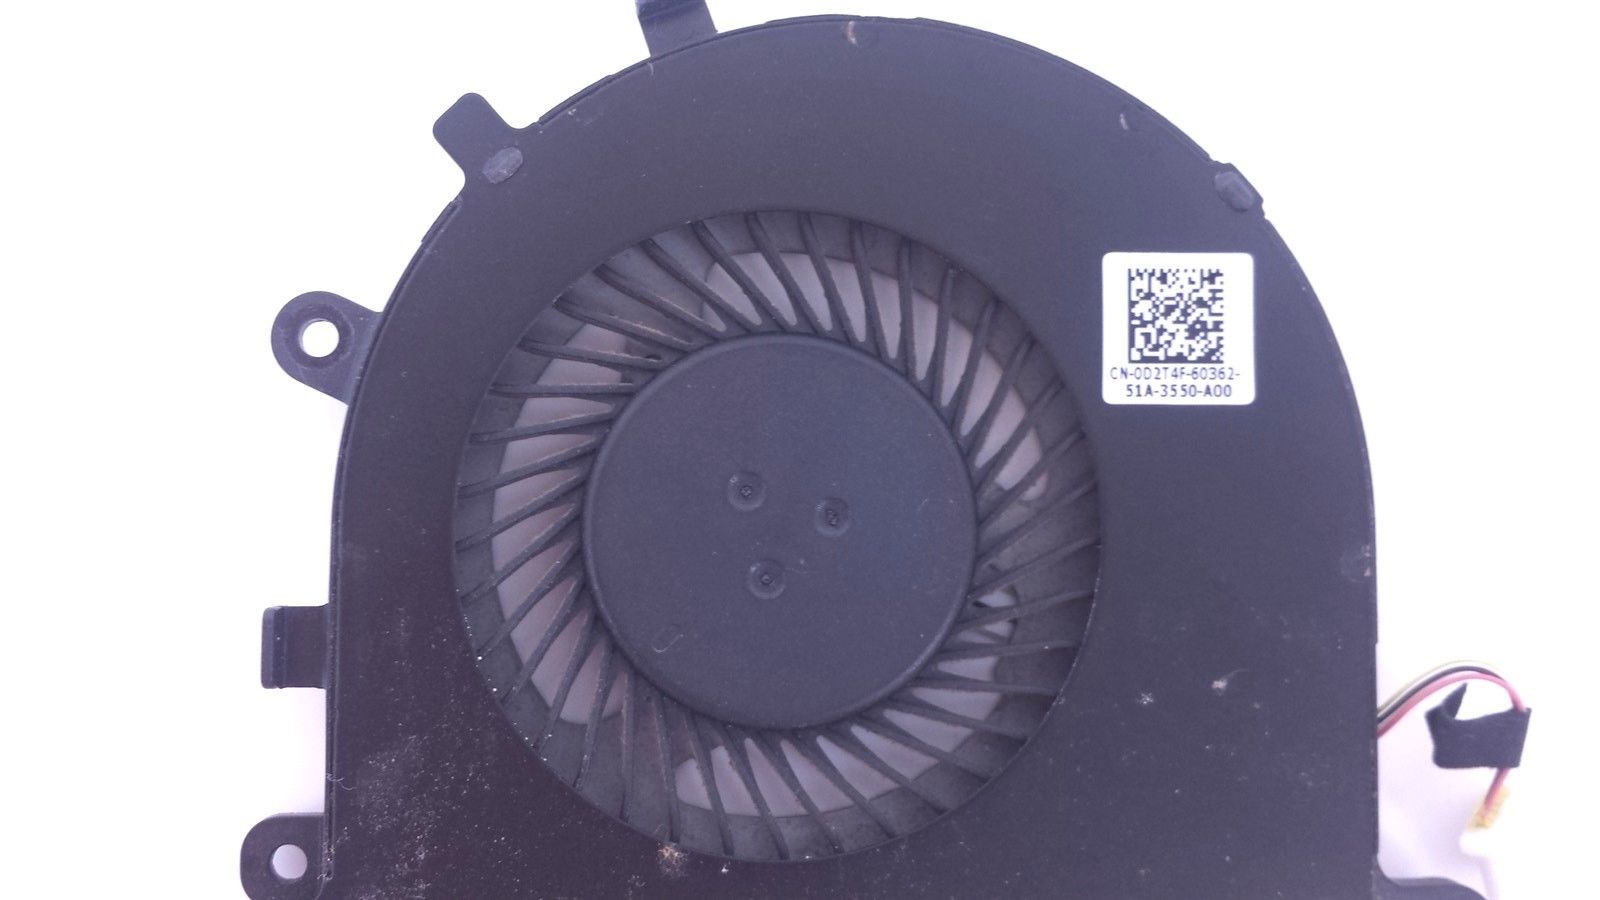 Genuine Dell Inspiron 15 7000 CPU Cooling Heatsink Fan D2T4F 0D2T4F